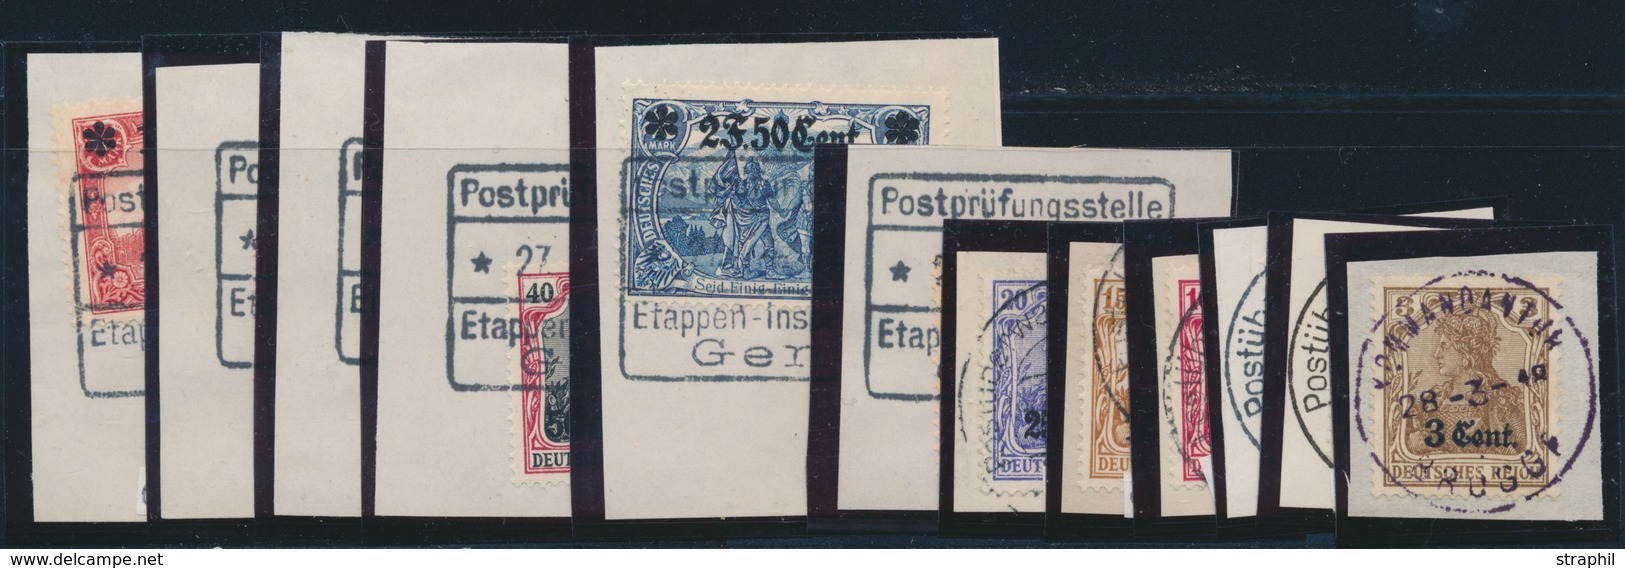 F POSTES D'ETAPES - F - N°26/37 - Obl. Div Dt Etappen GENT - TB - War Stamps